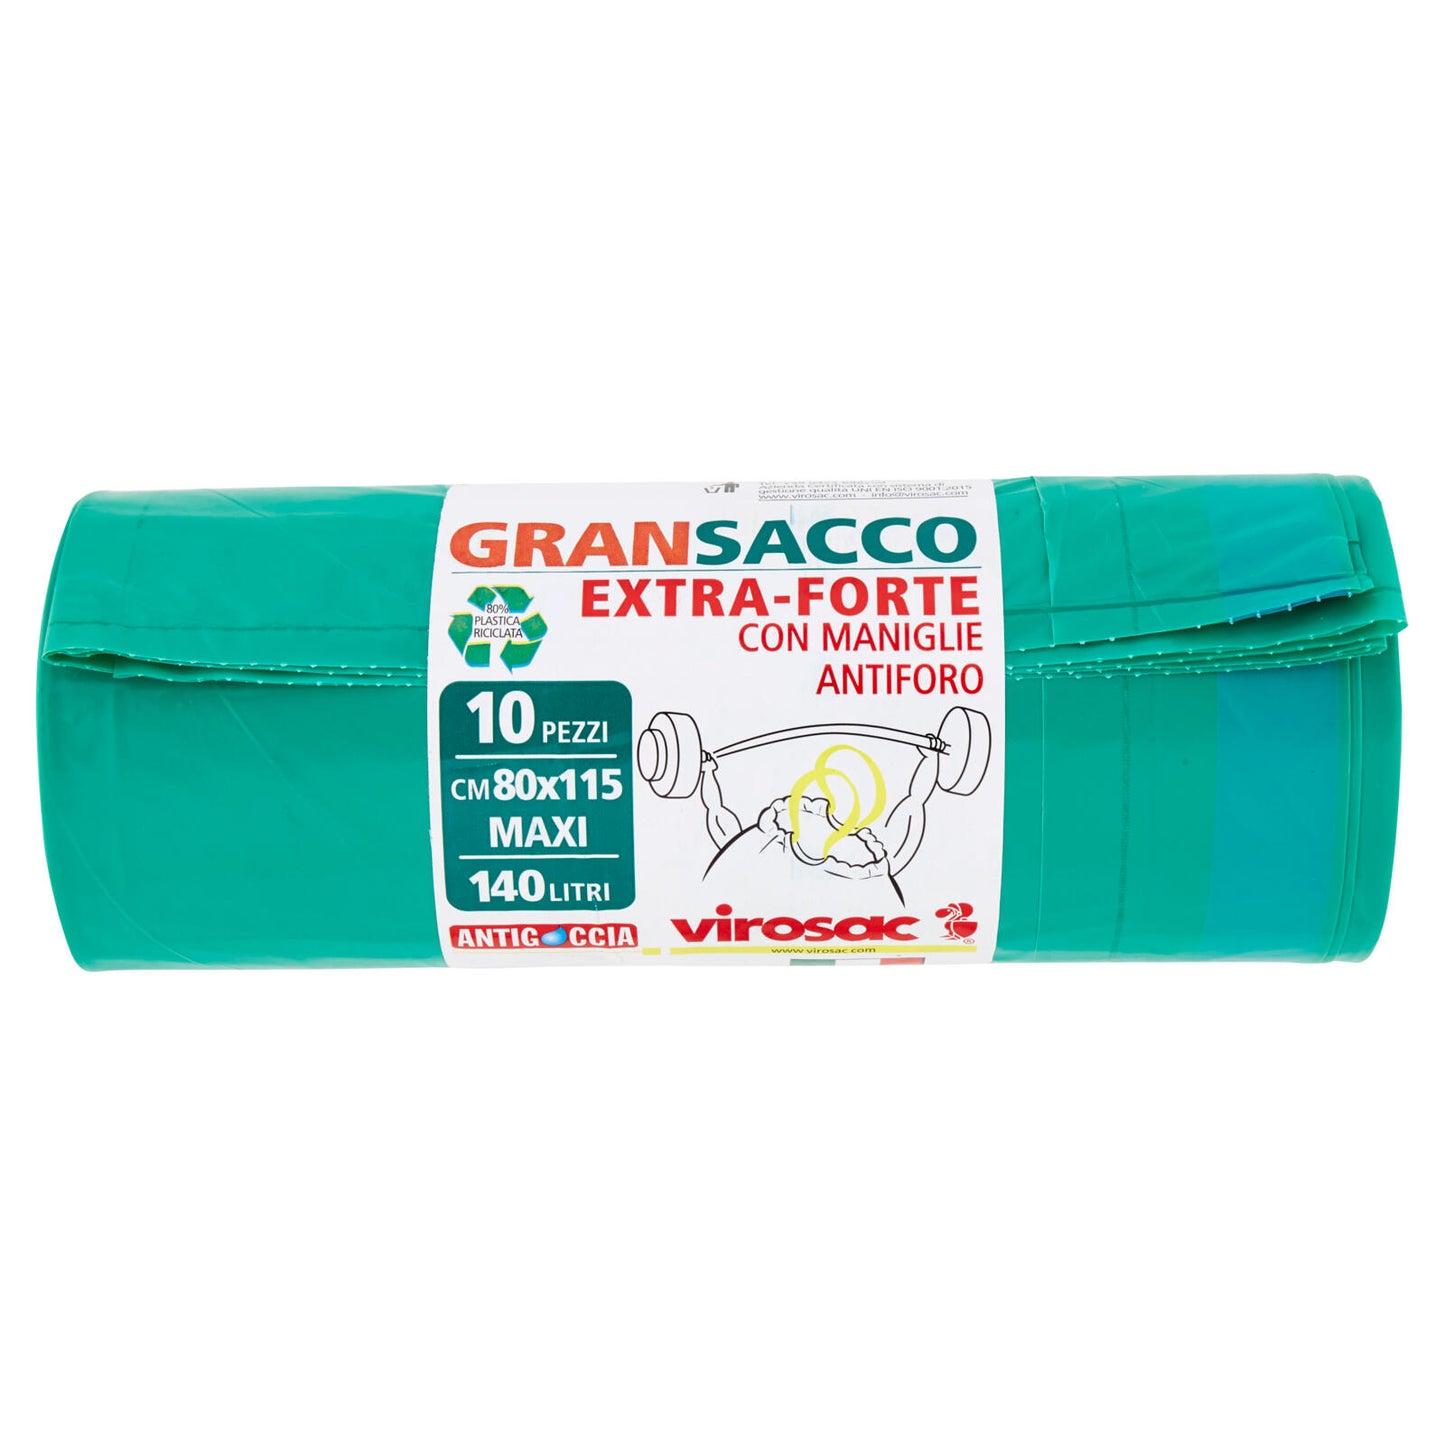 virosac Gransacco Extra-Forte con Maniglie Antiforo Cm 80x115 Maxi 140 Litri 10 pz